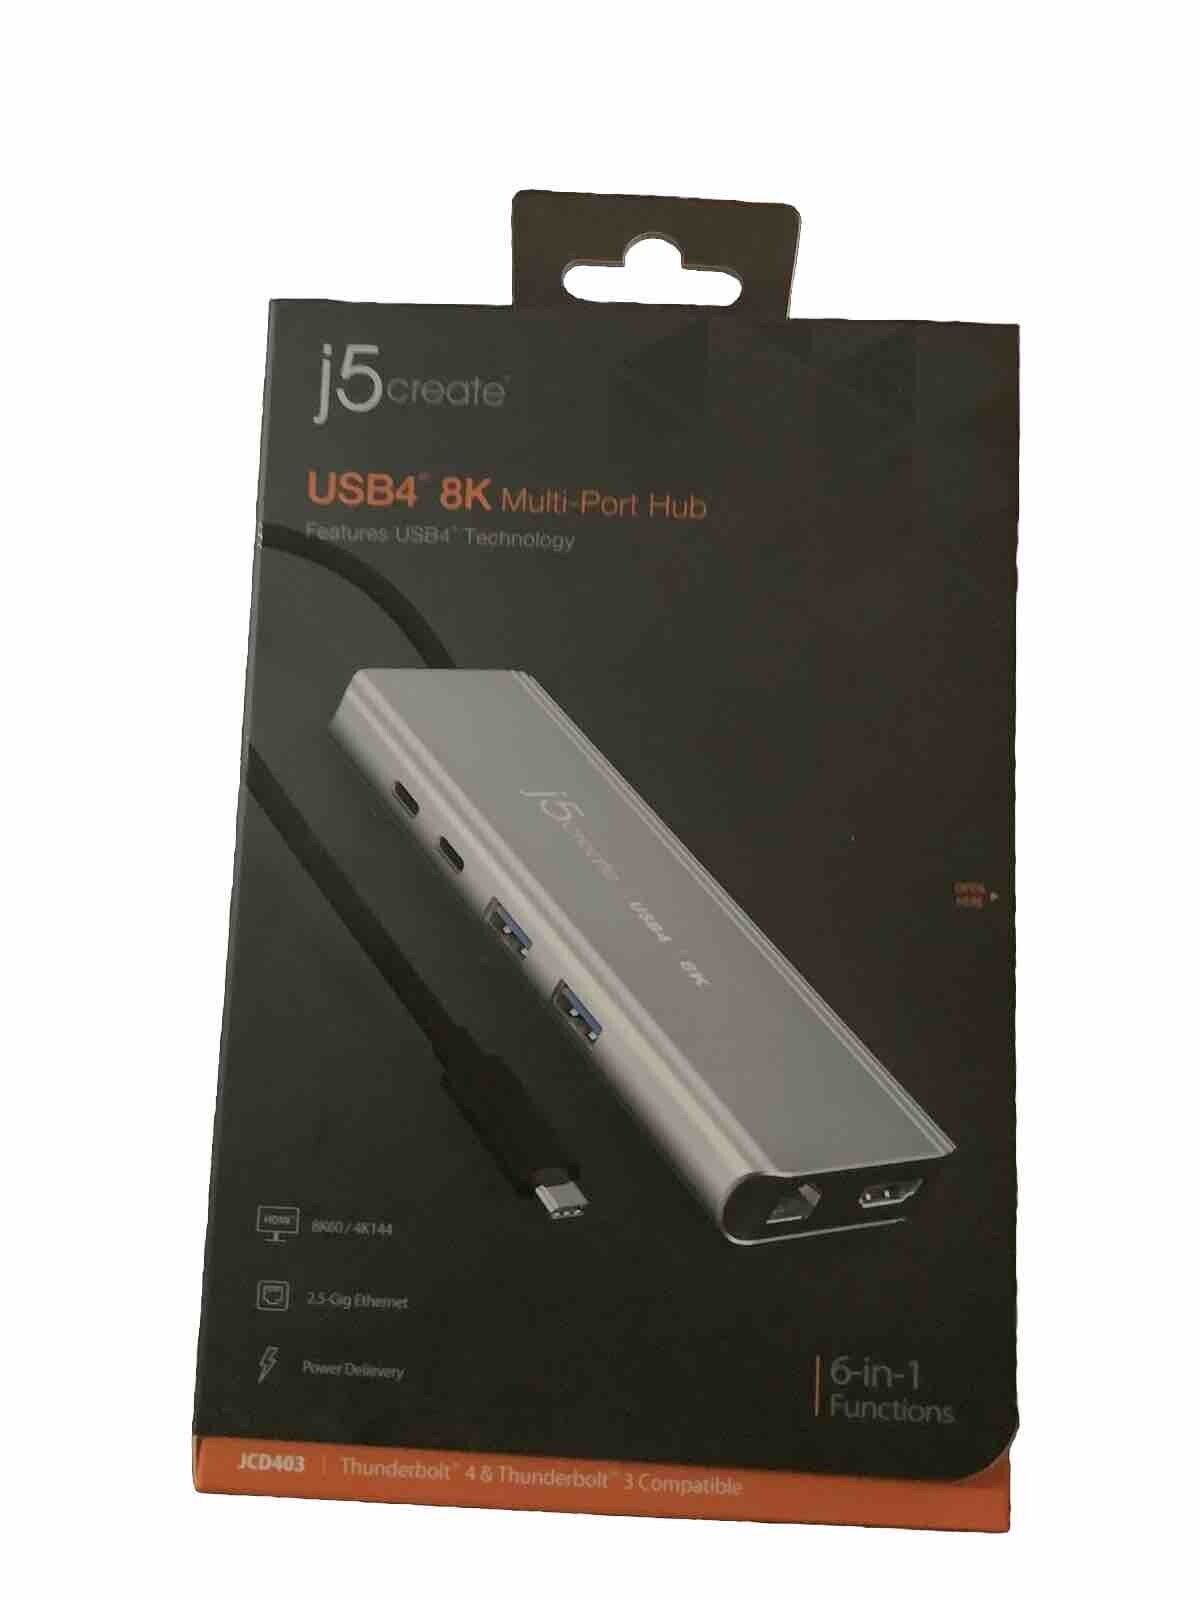 Authentic j5create JCD403 USB4 8K Multi-Port Hub 6-in-1 Functions